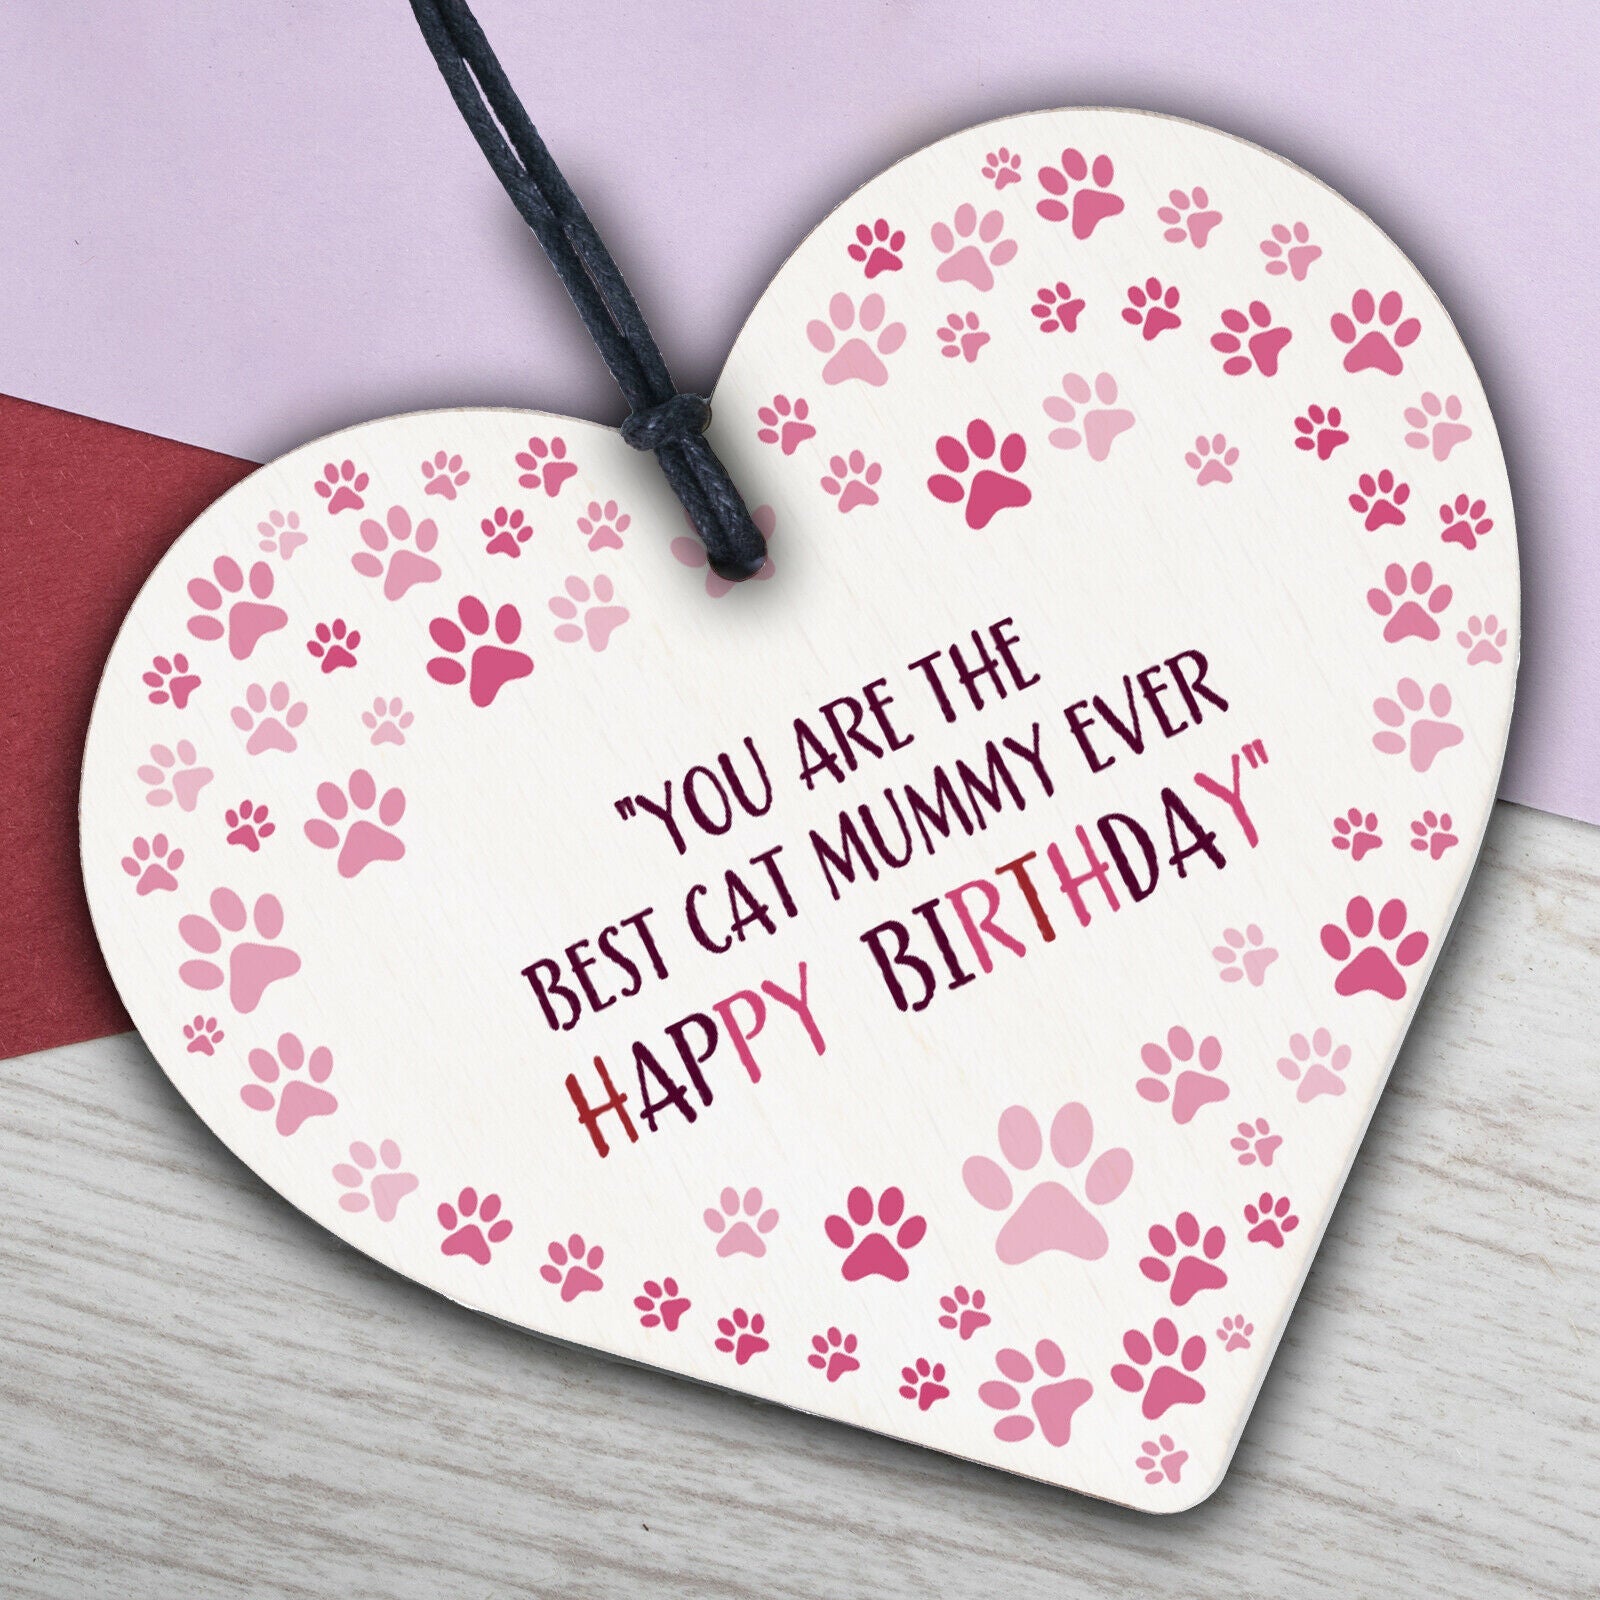 Best Cat Mummy Funny Mum Birthday Gifts Wooden Heart